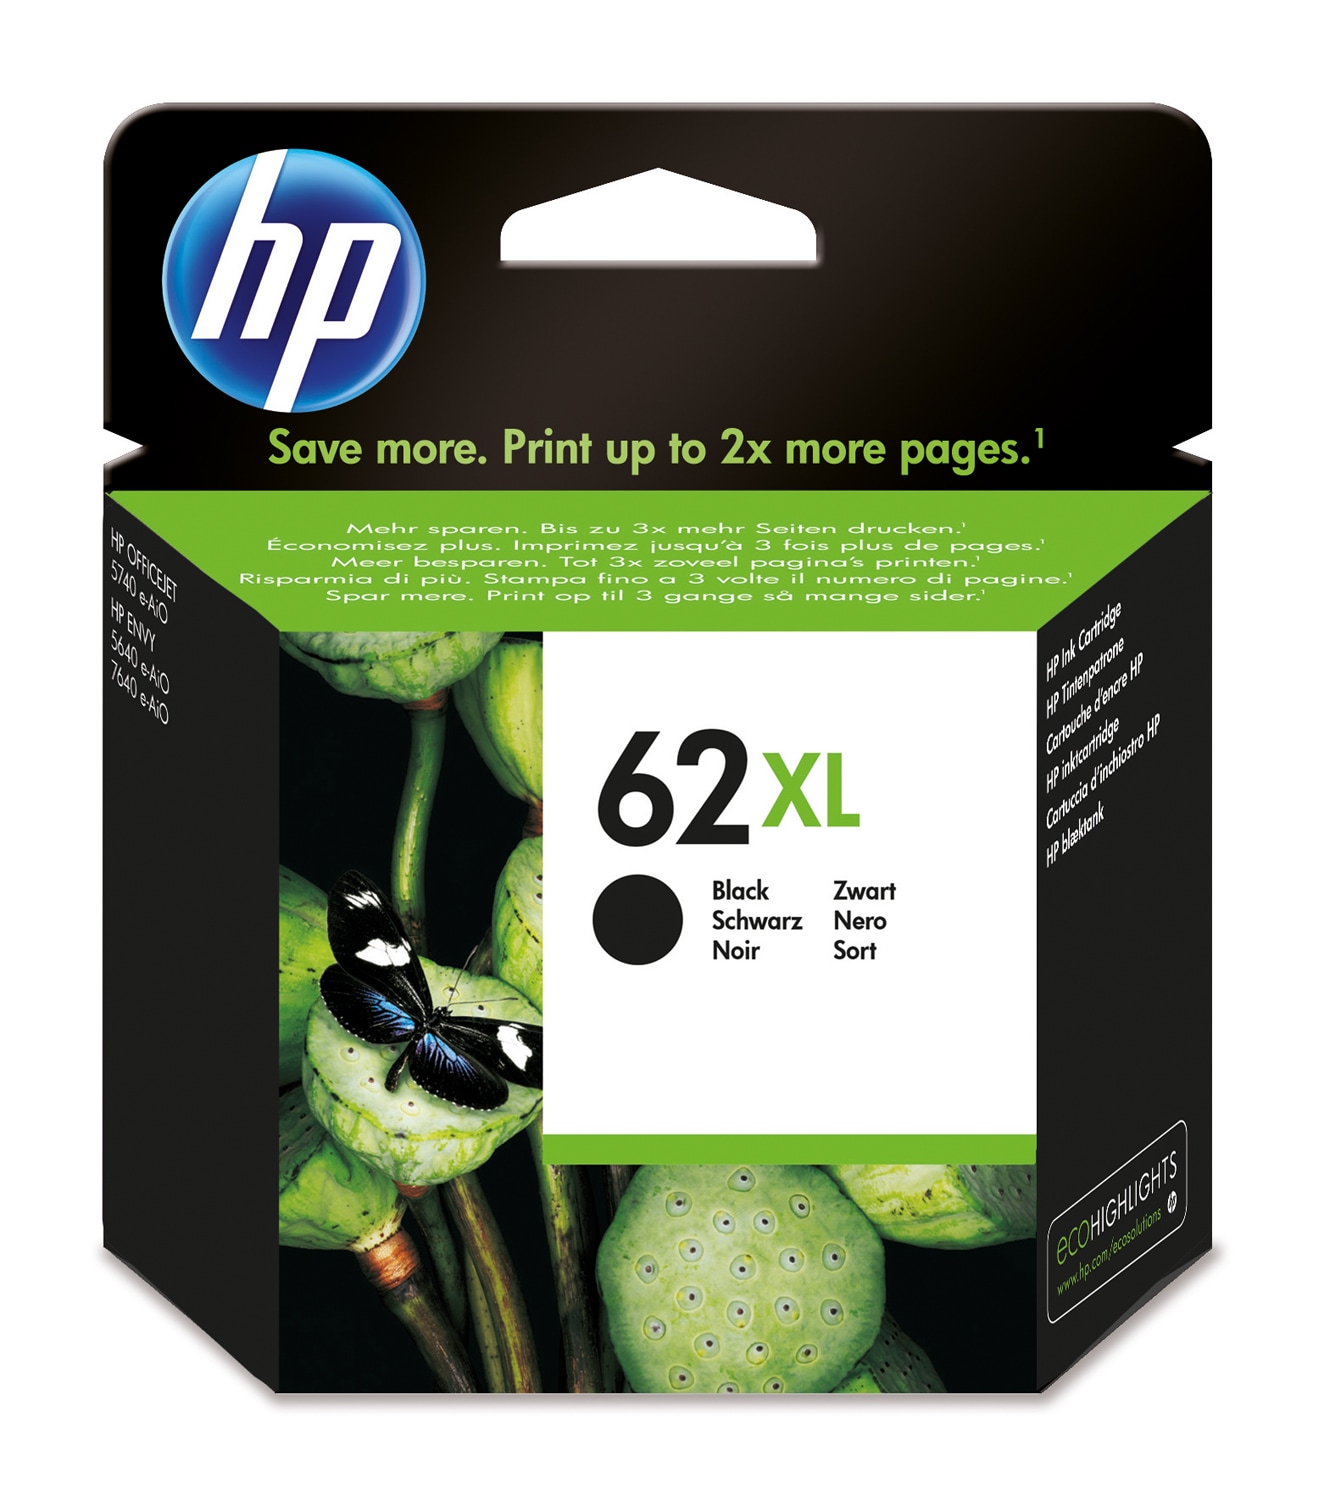 HP 62XL High Original Yield | South Ink Black HP® Africa Cartridge